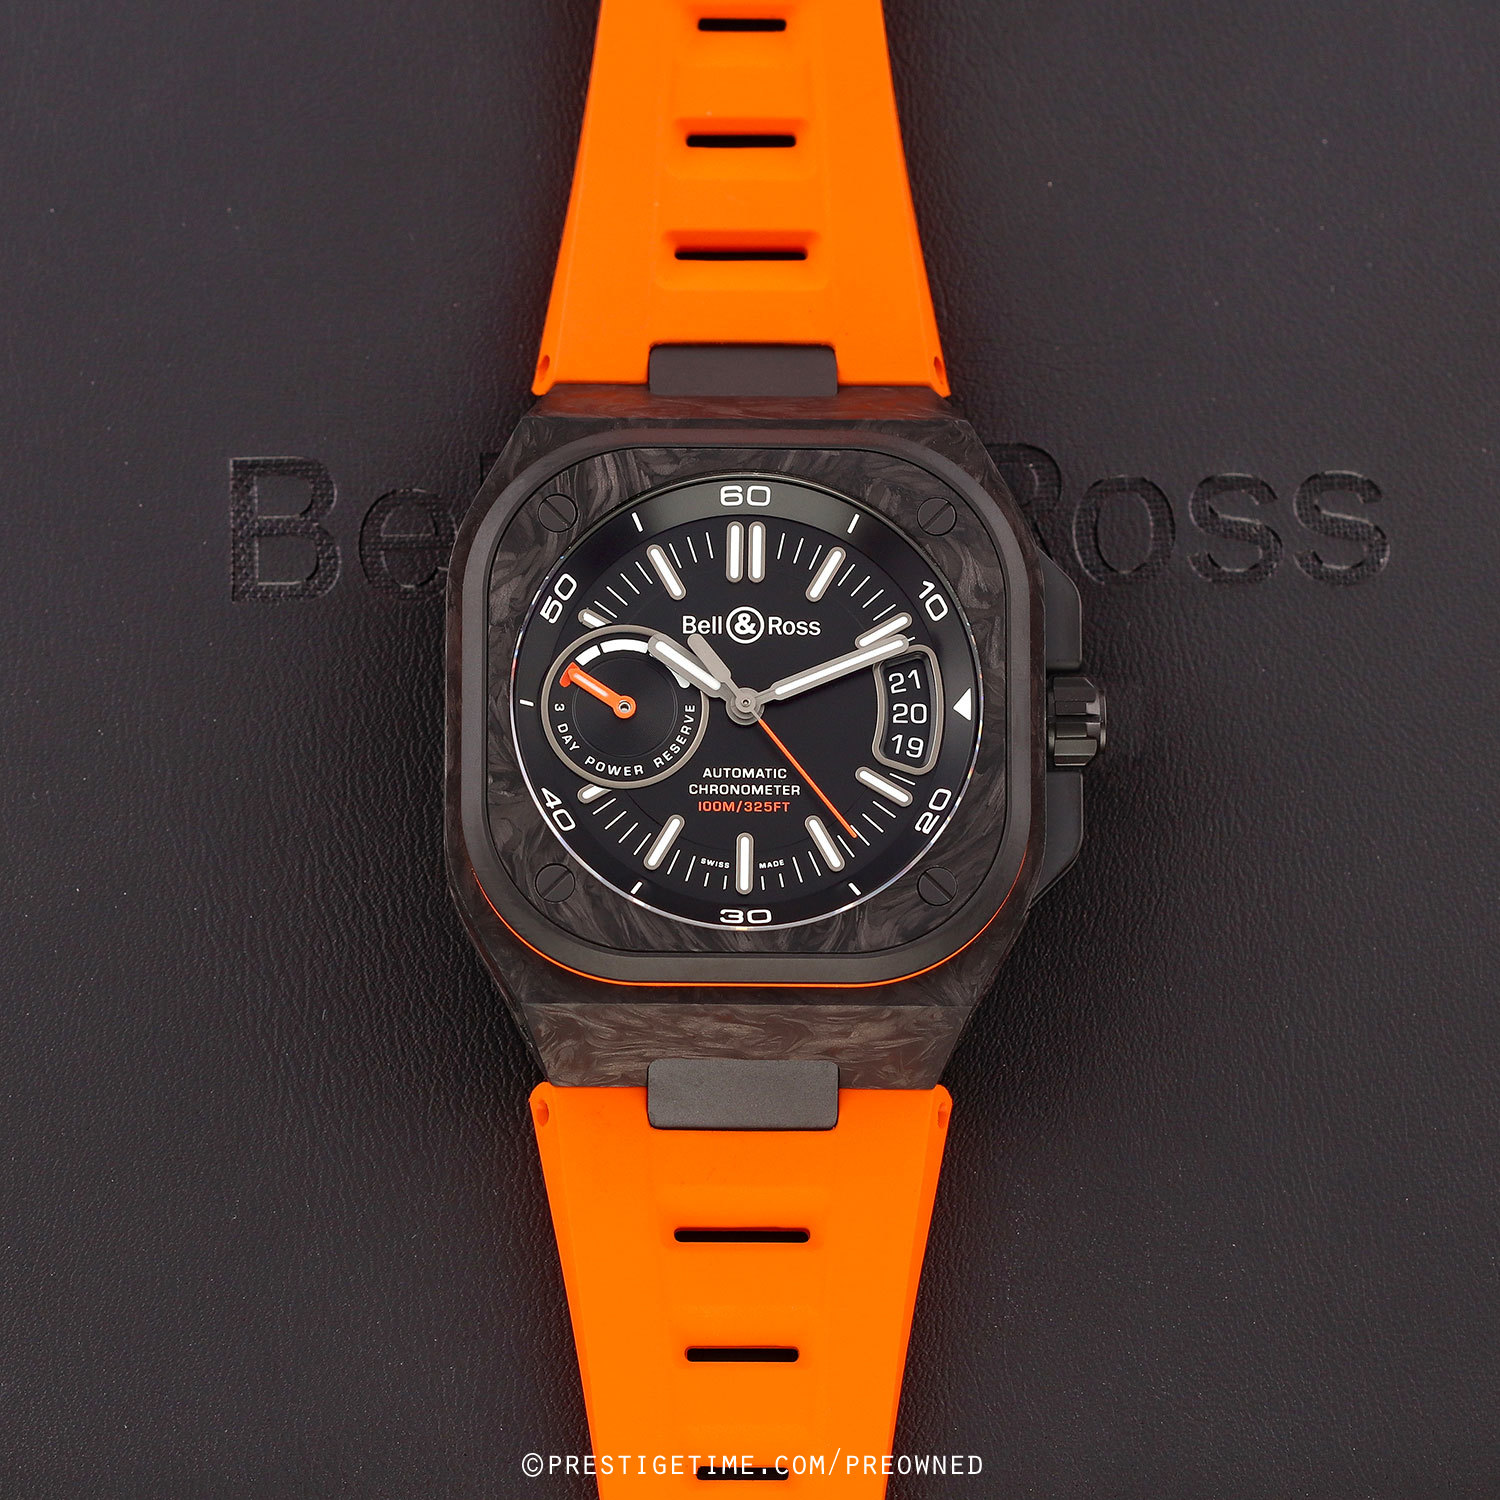 BR-X5 Carbon Orange